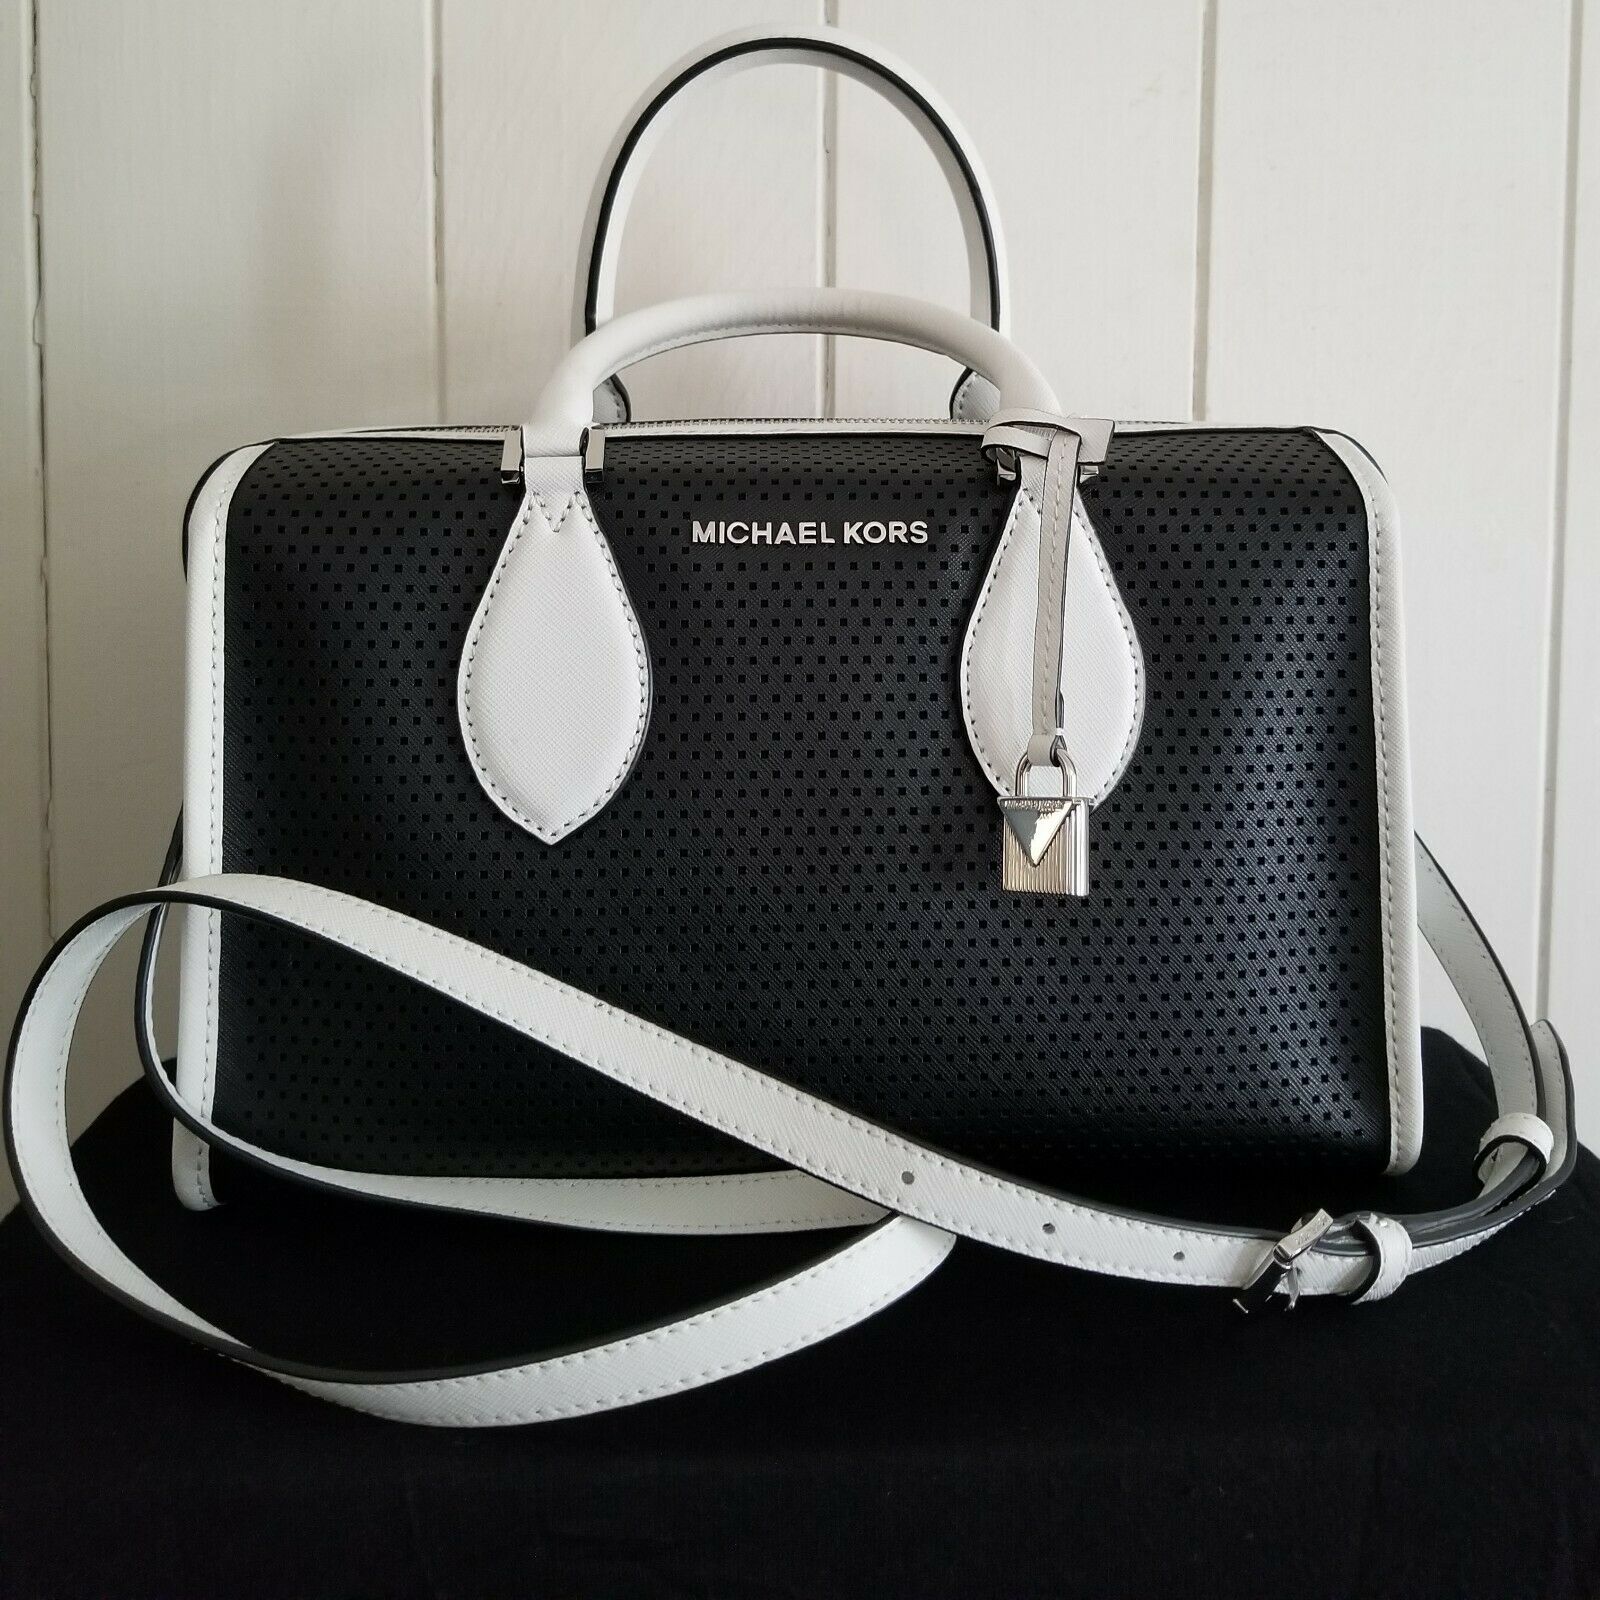 michael kors black and white purse